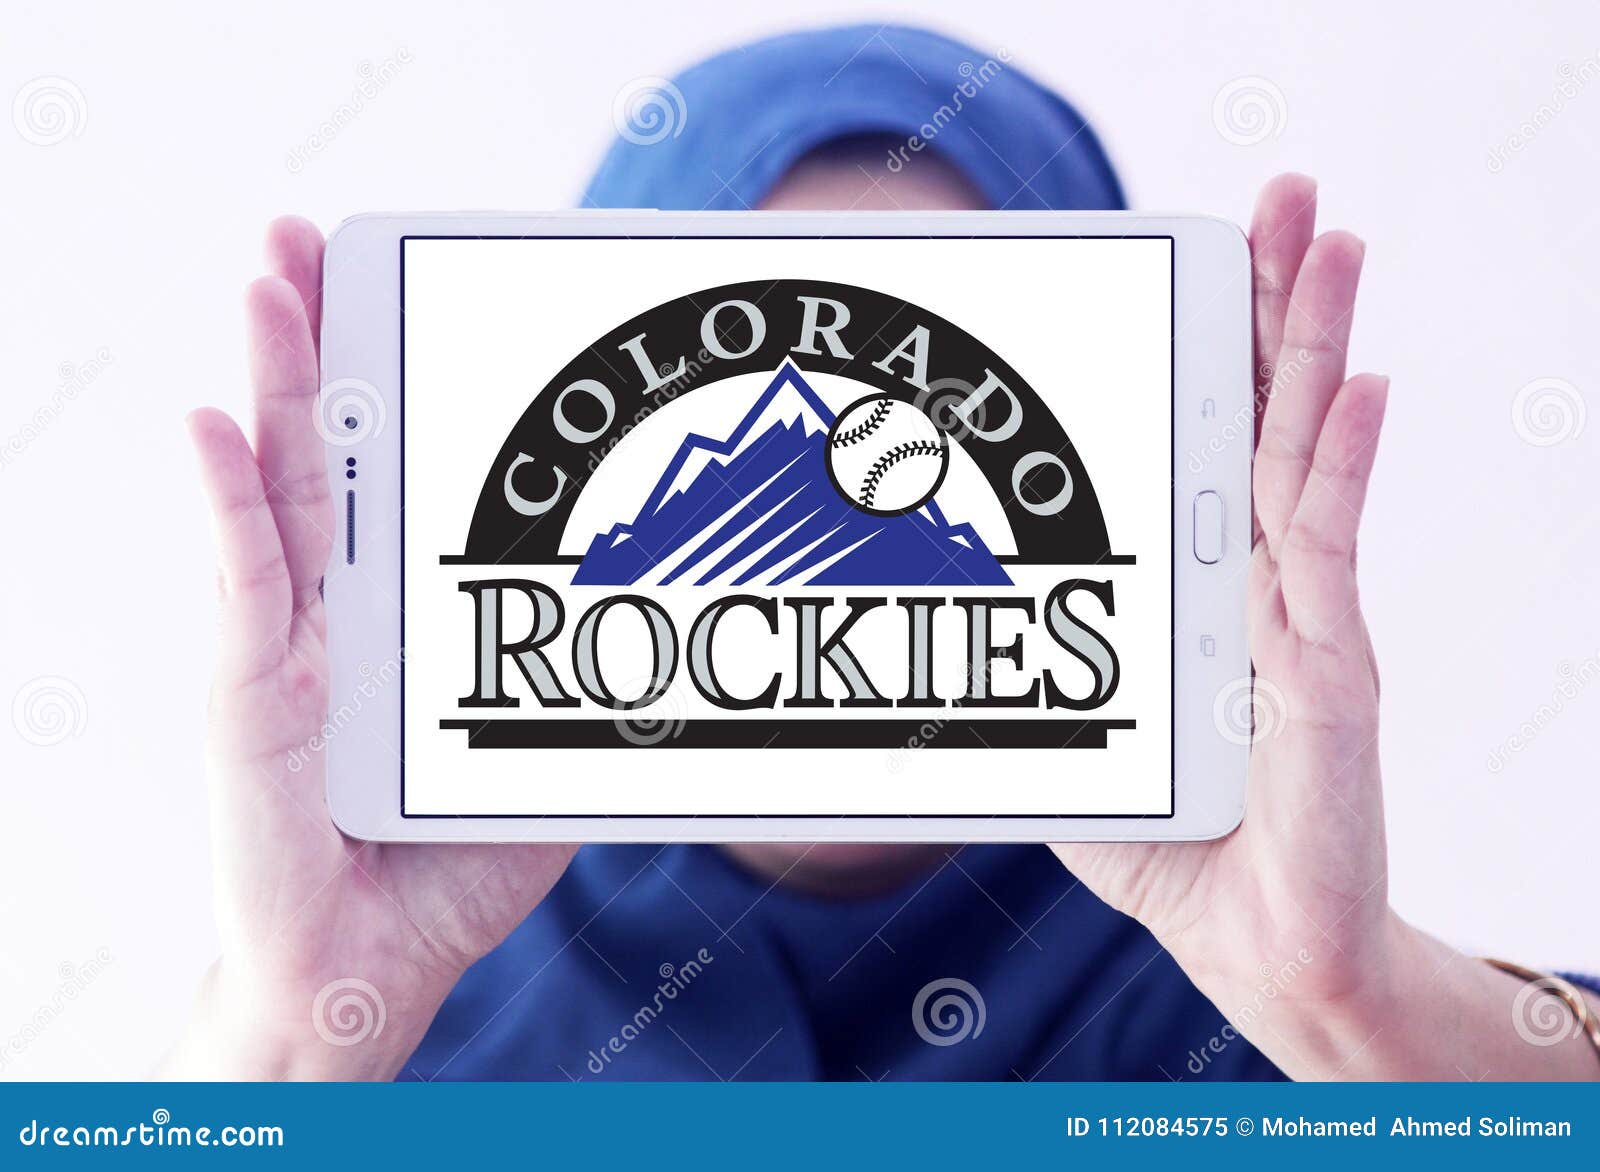 colorado rockies baseball team